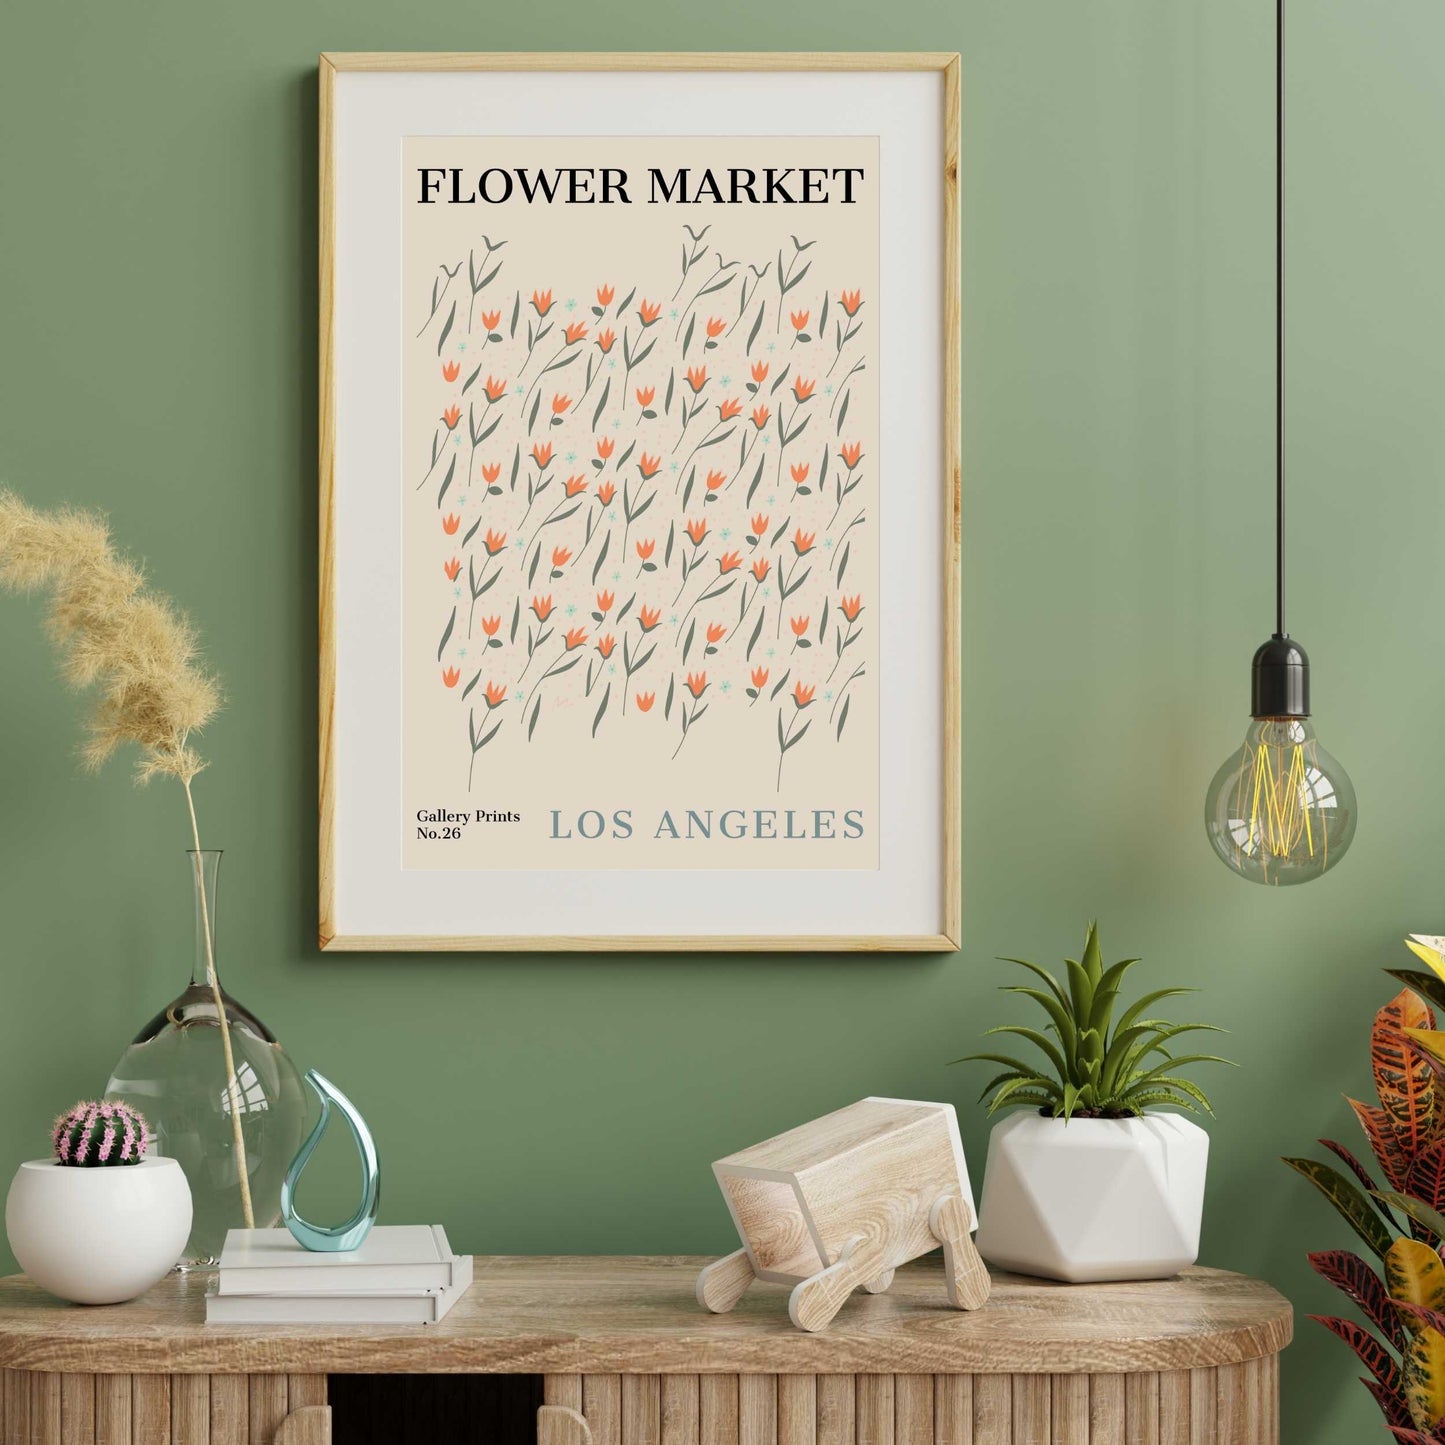 Los Angeles Flower Market Poster | S01